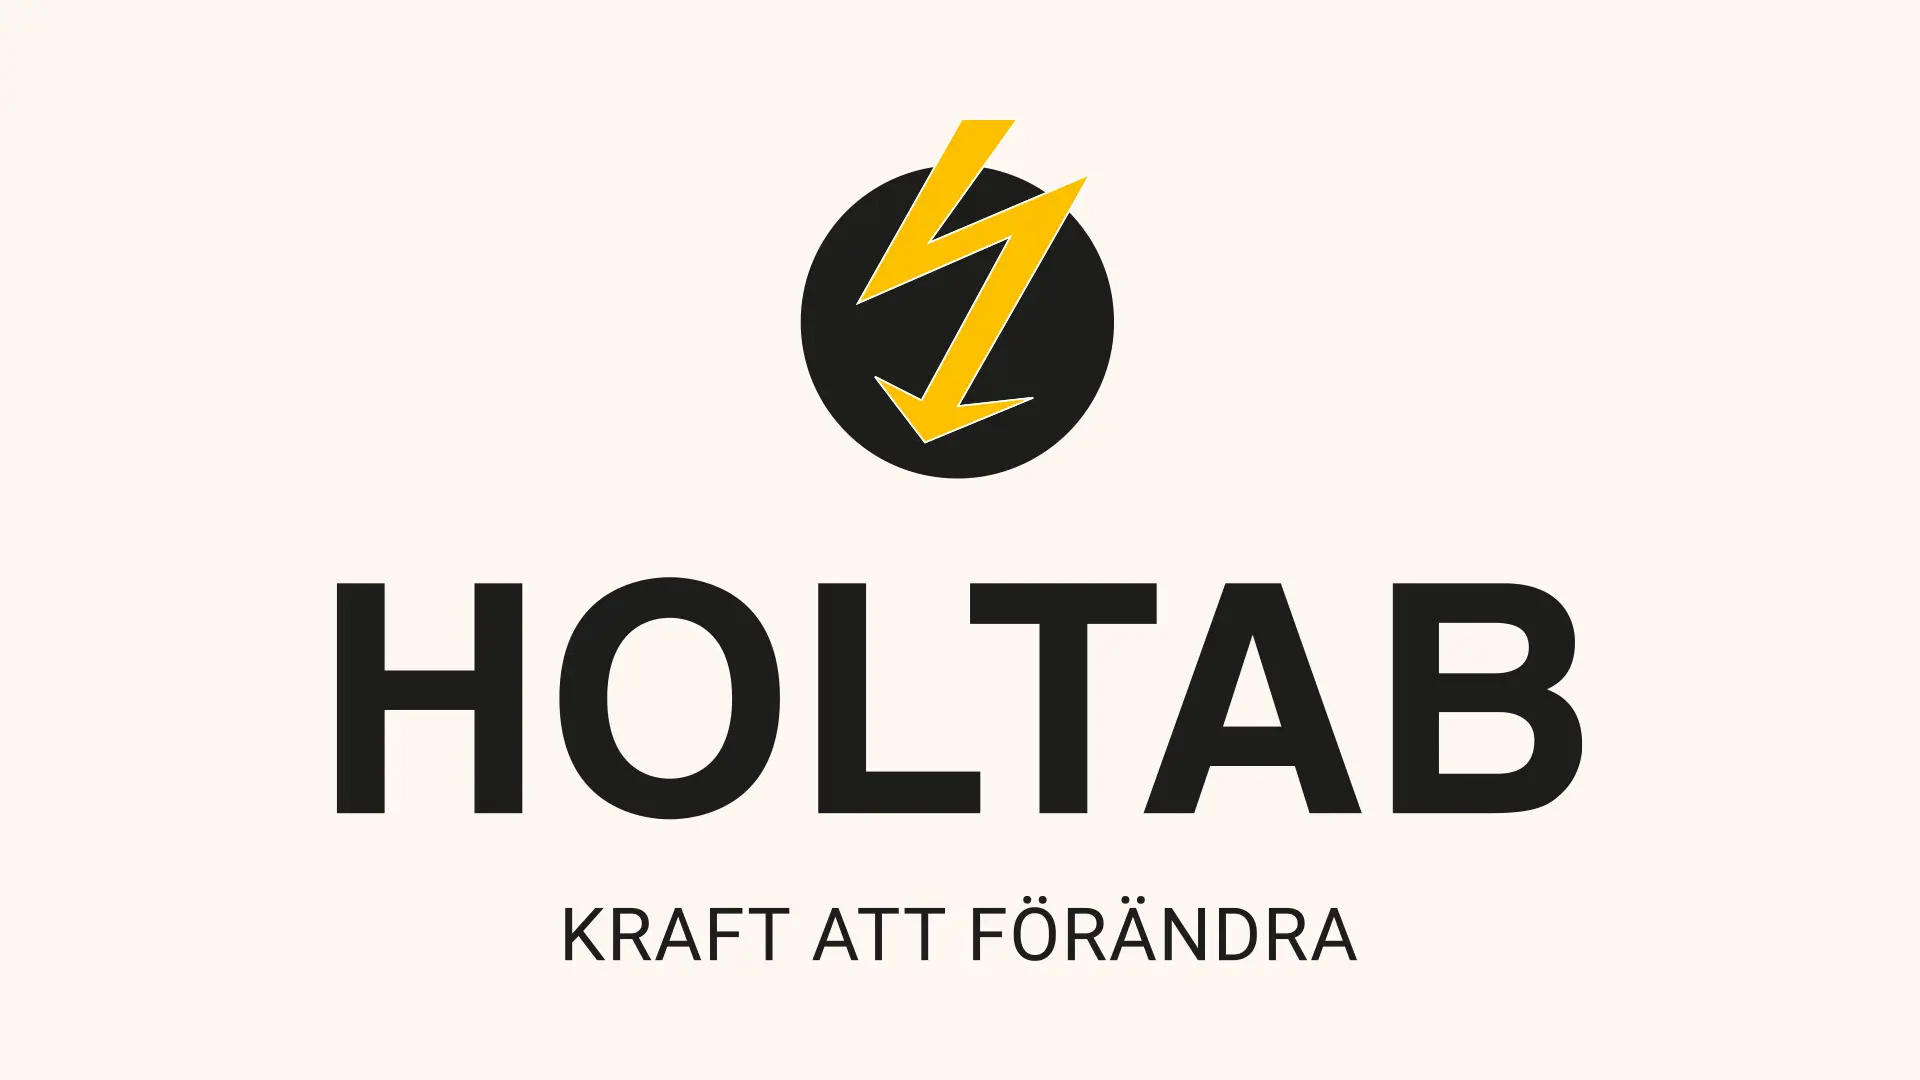 Holtab